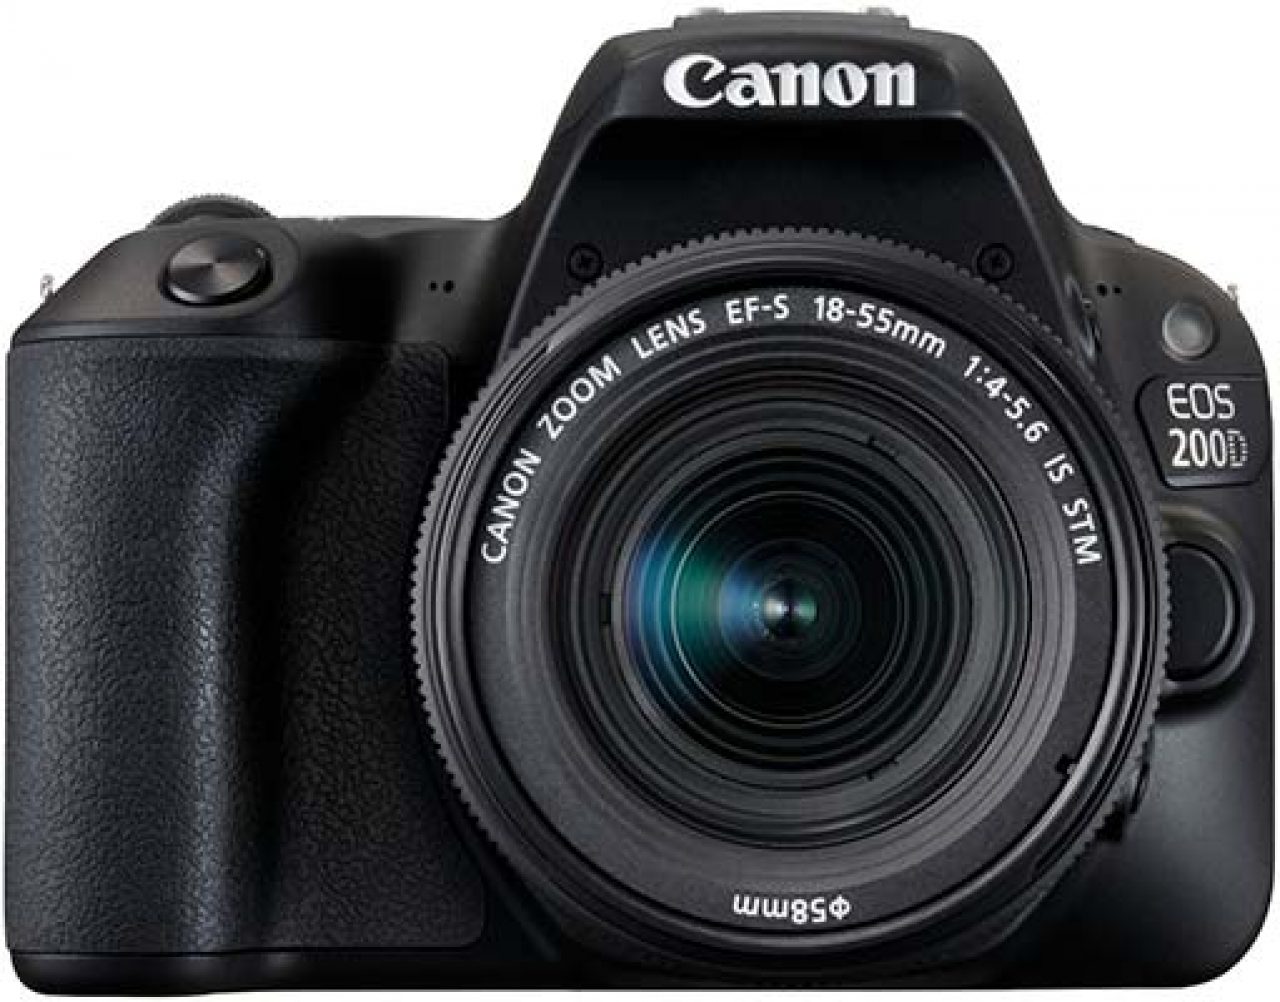 Canon EOS 200D Review